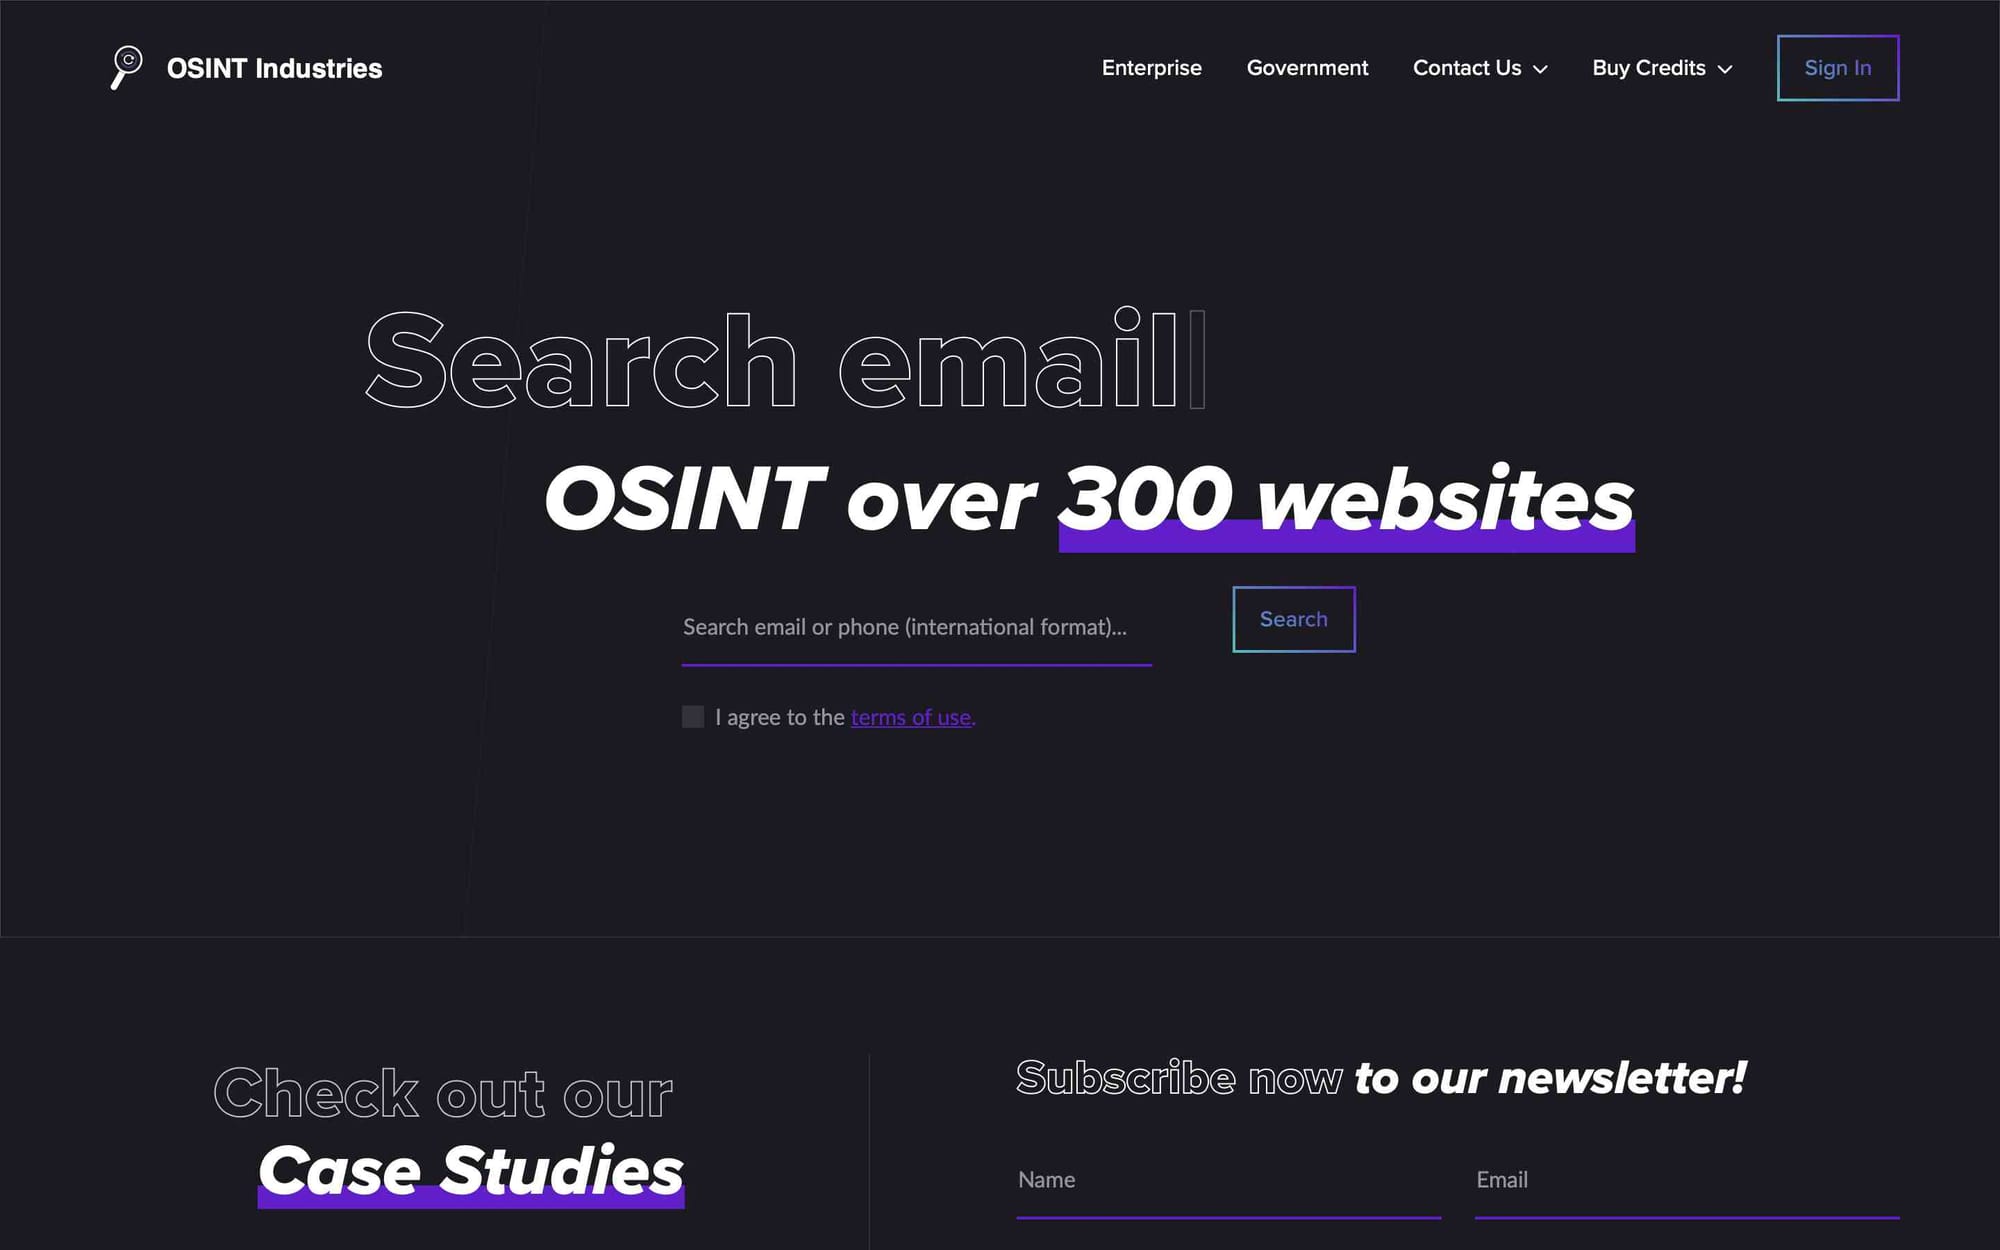 OSINT Industries website